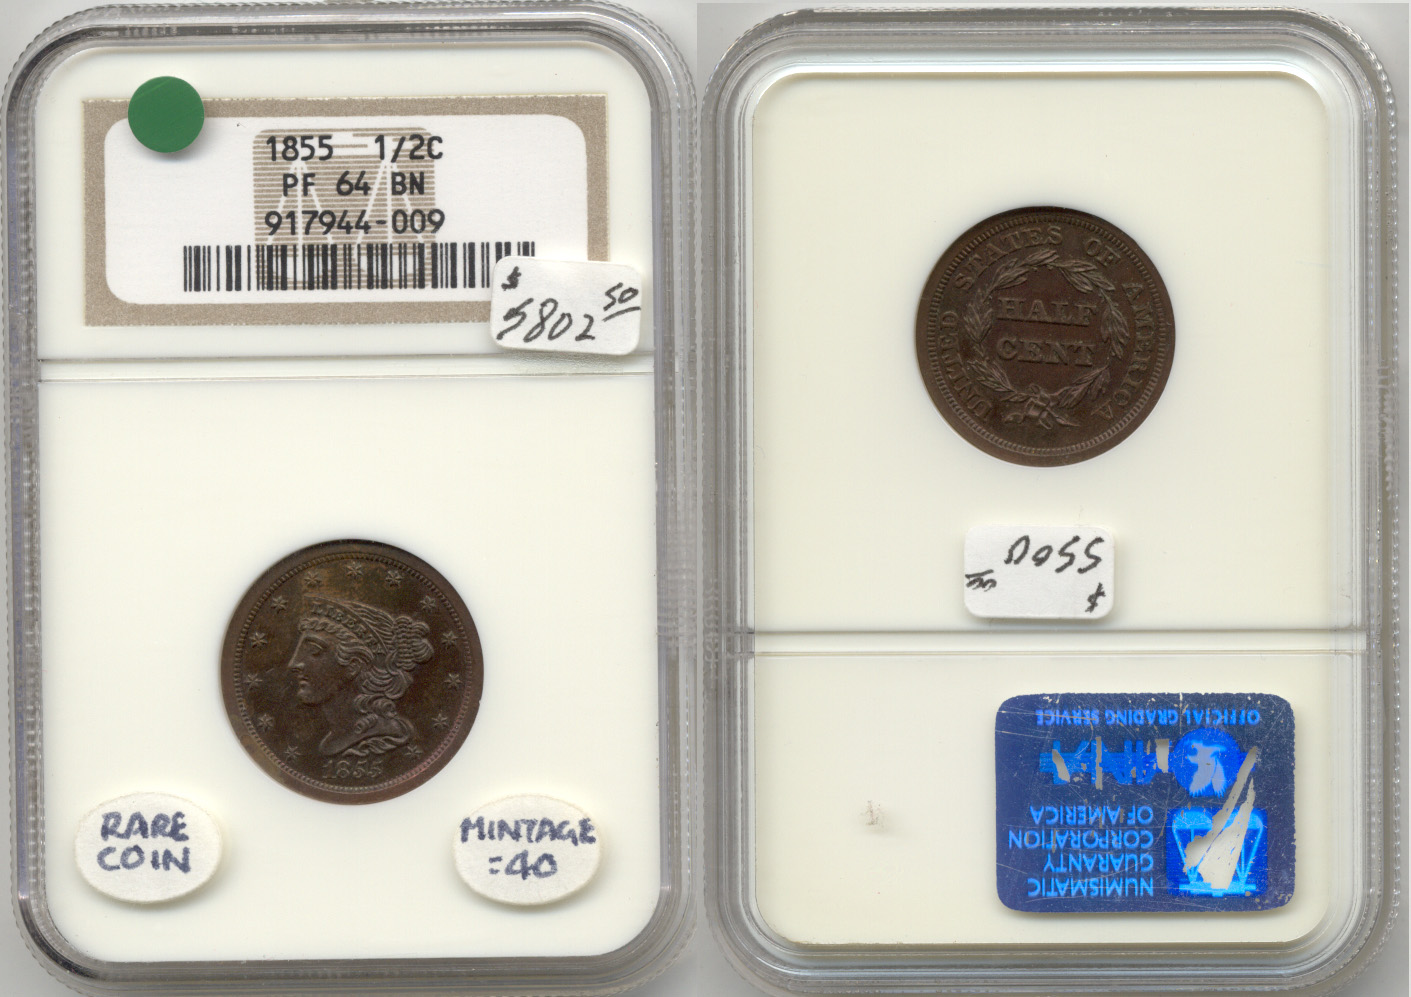 1855 Coronet Half Cent in NGC Proof-64 Brown